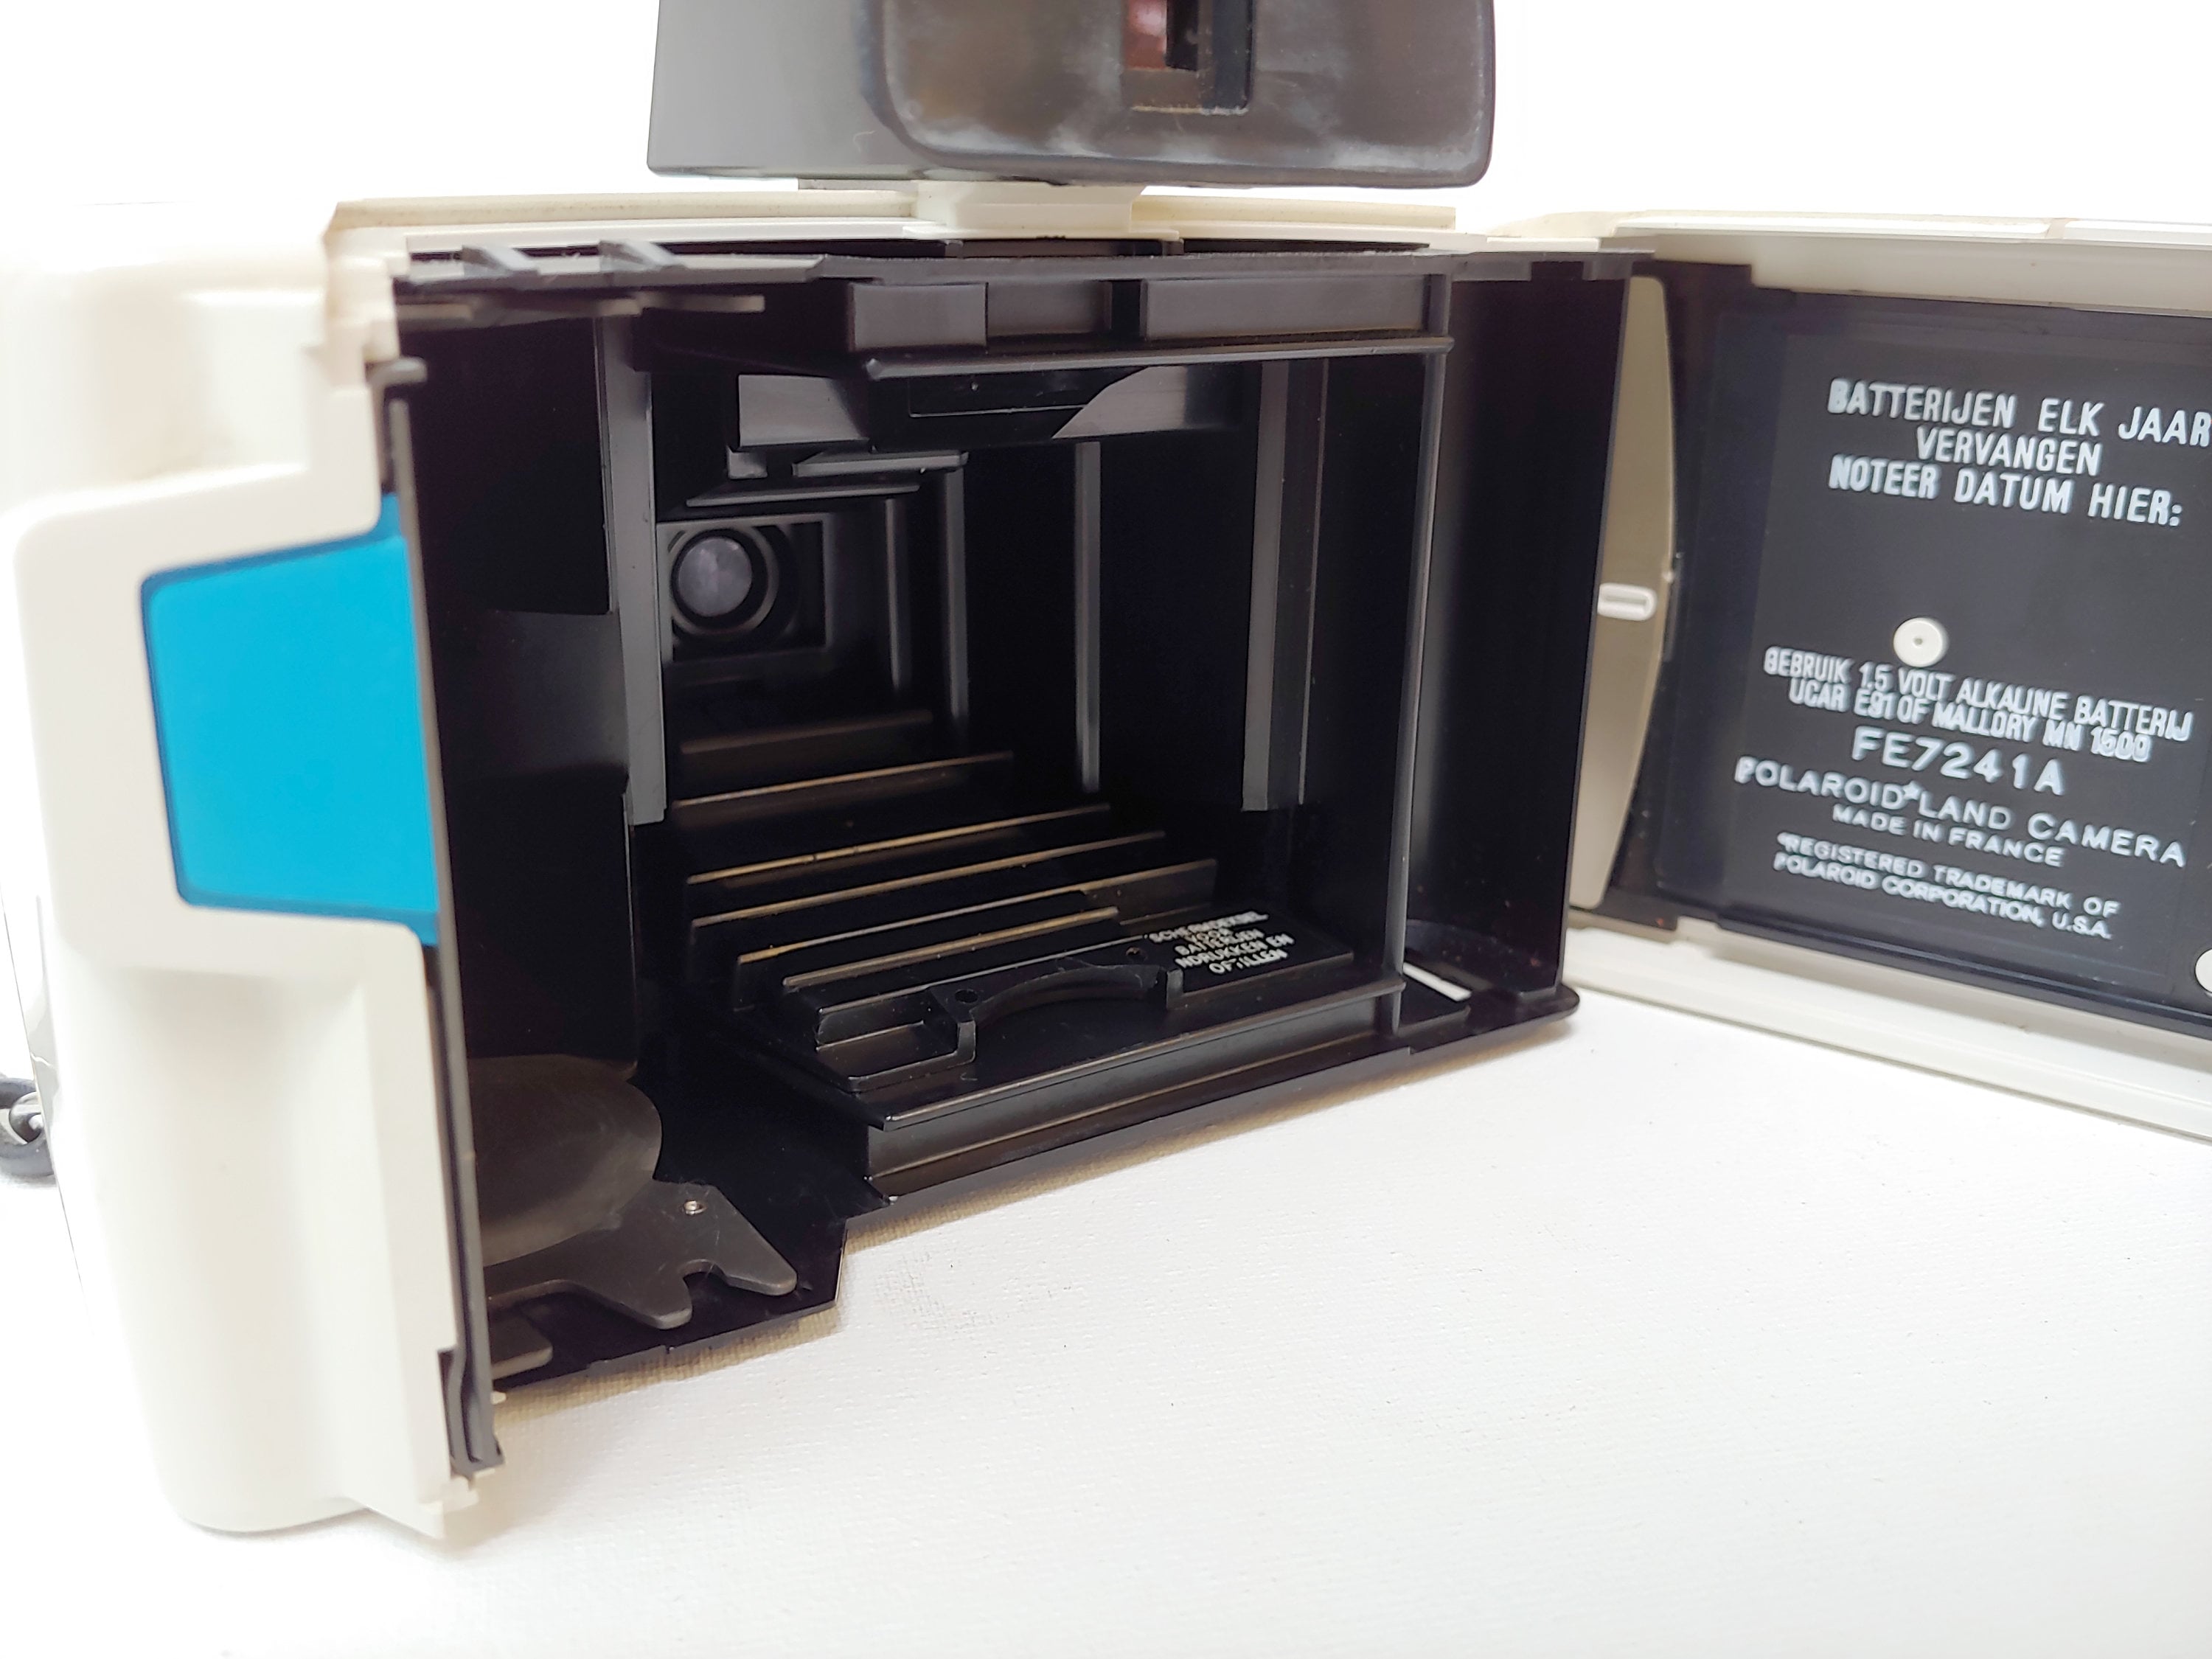 Space Age Design - Polaroid Swinger Model 20 Instant Film Camera photo pic